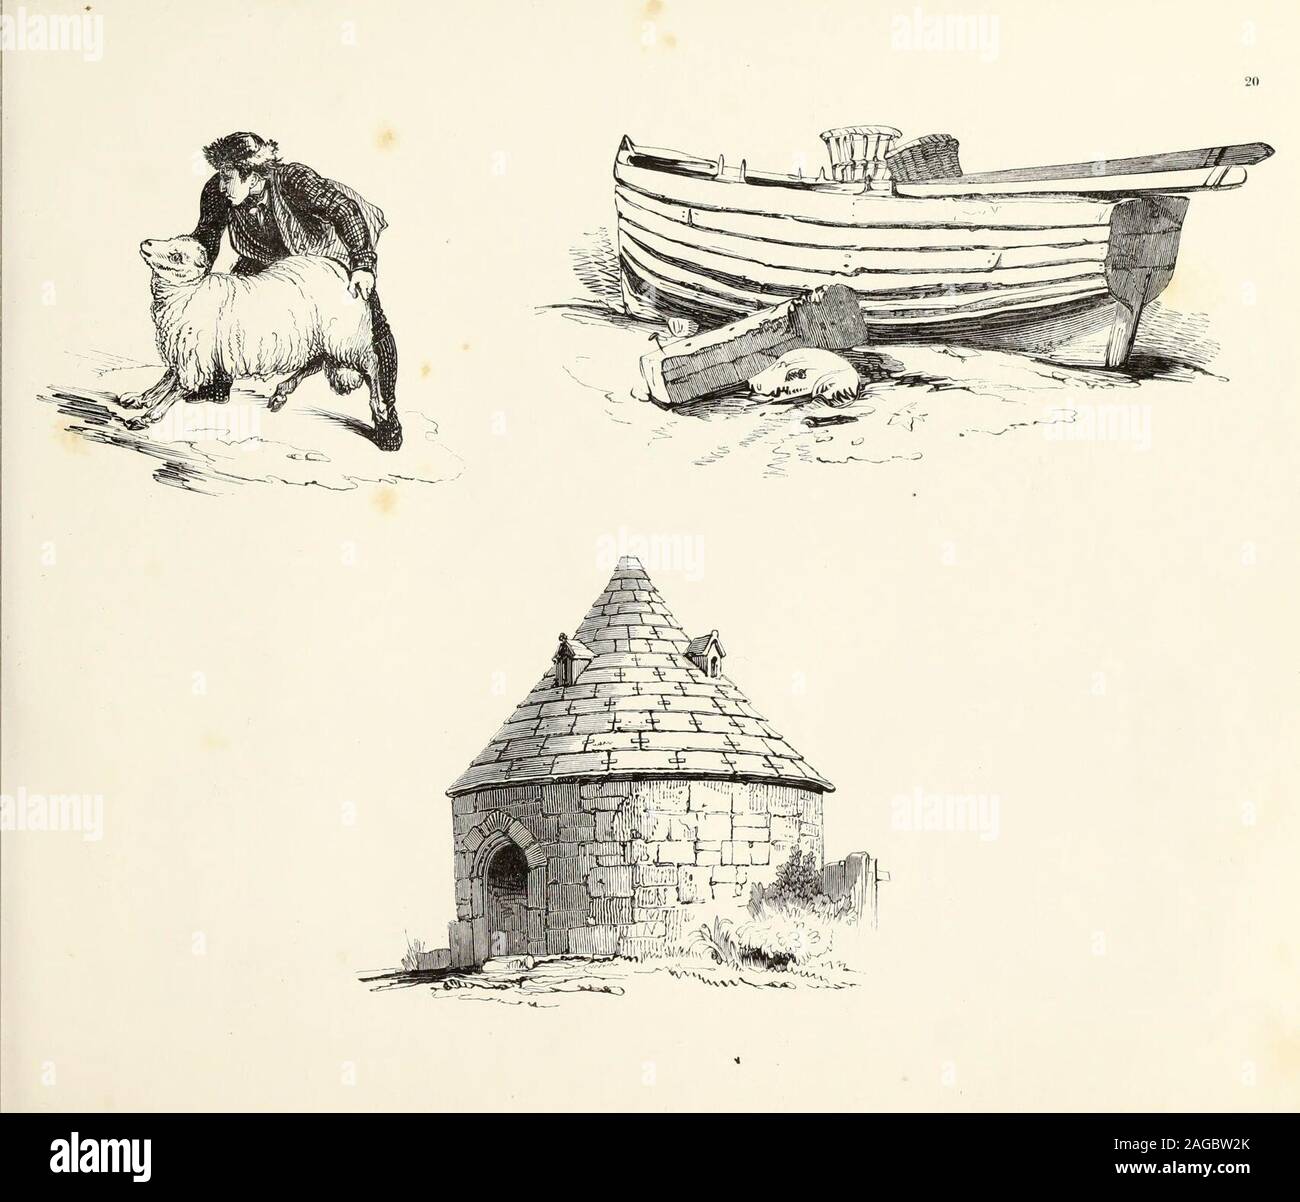 Dibujo De Libros Fotos e Imágenes de stock - Alamy